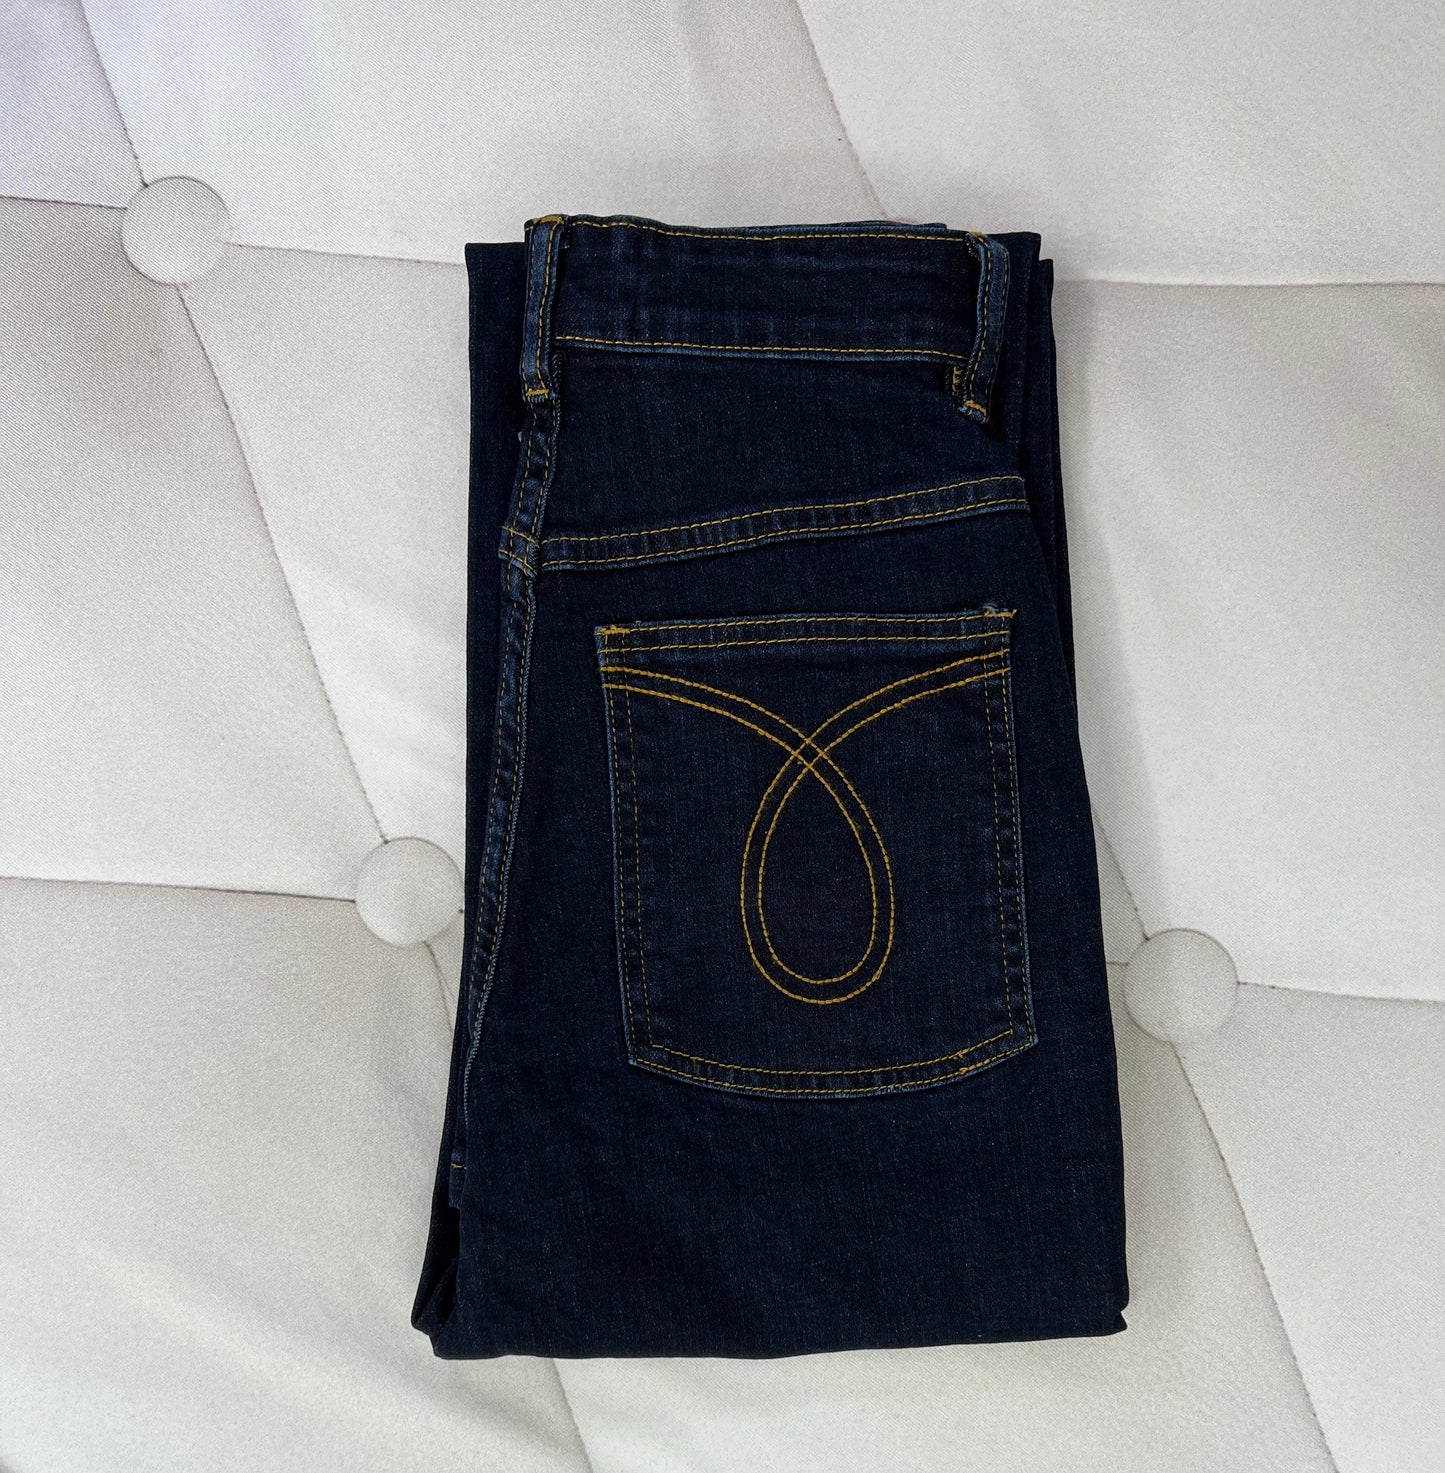 Astro Bettie Midge Classic Reproduction Jeans - Indigo